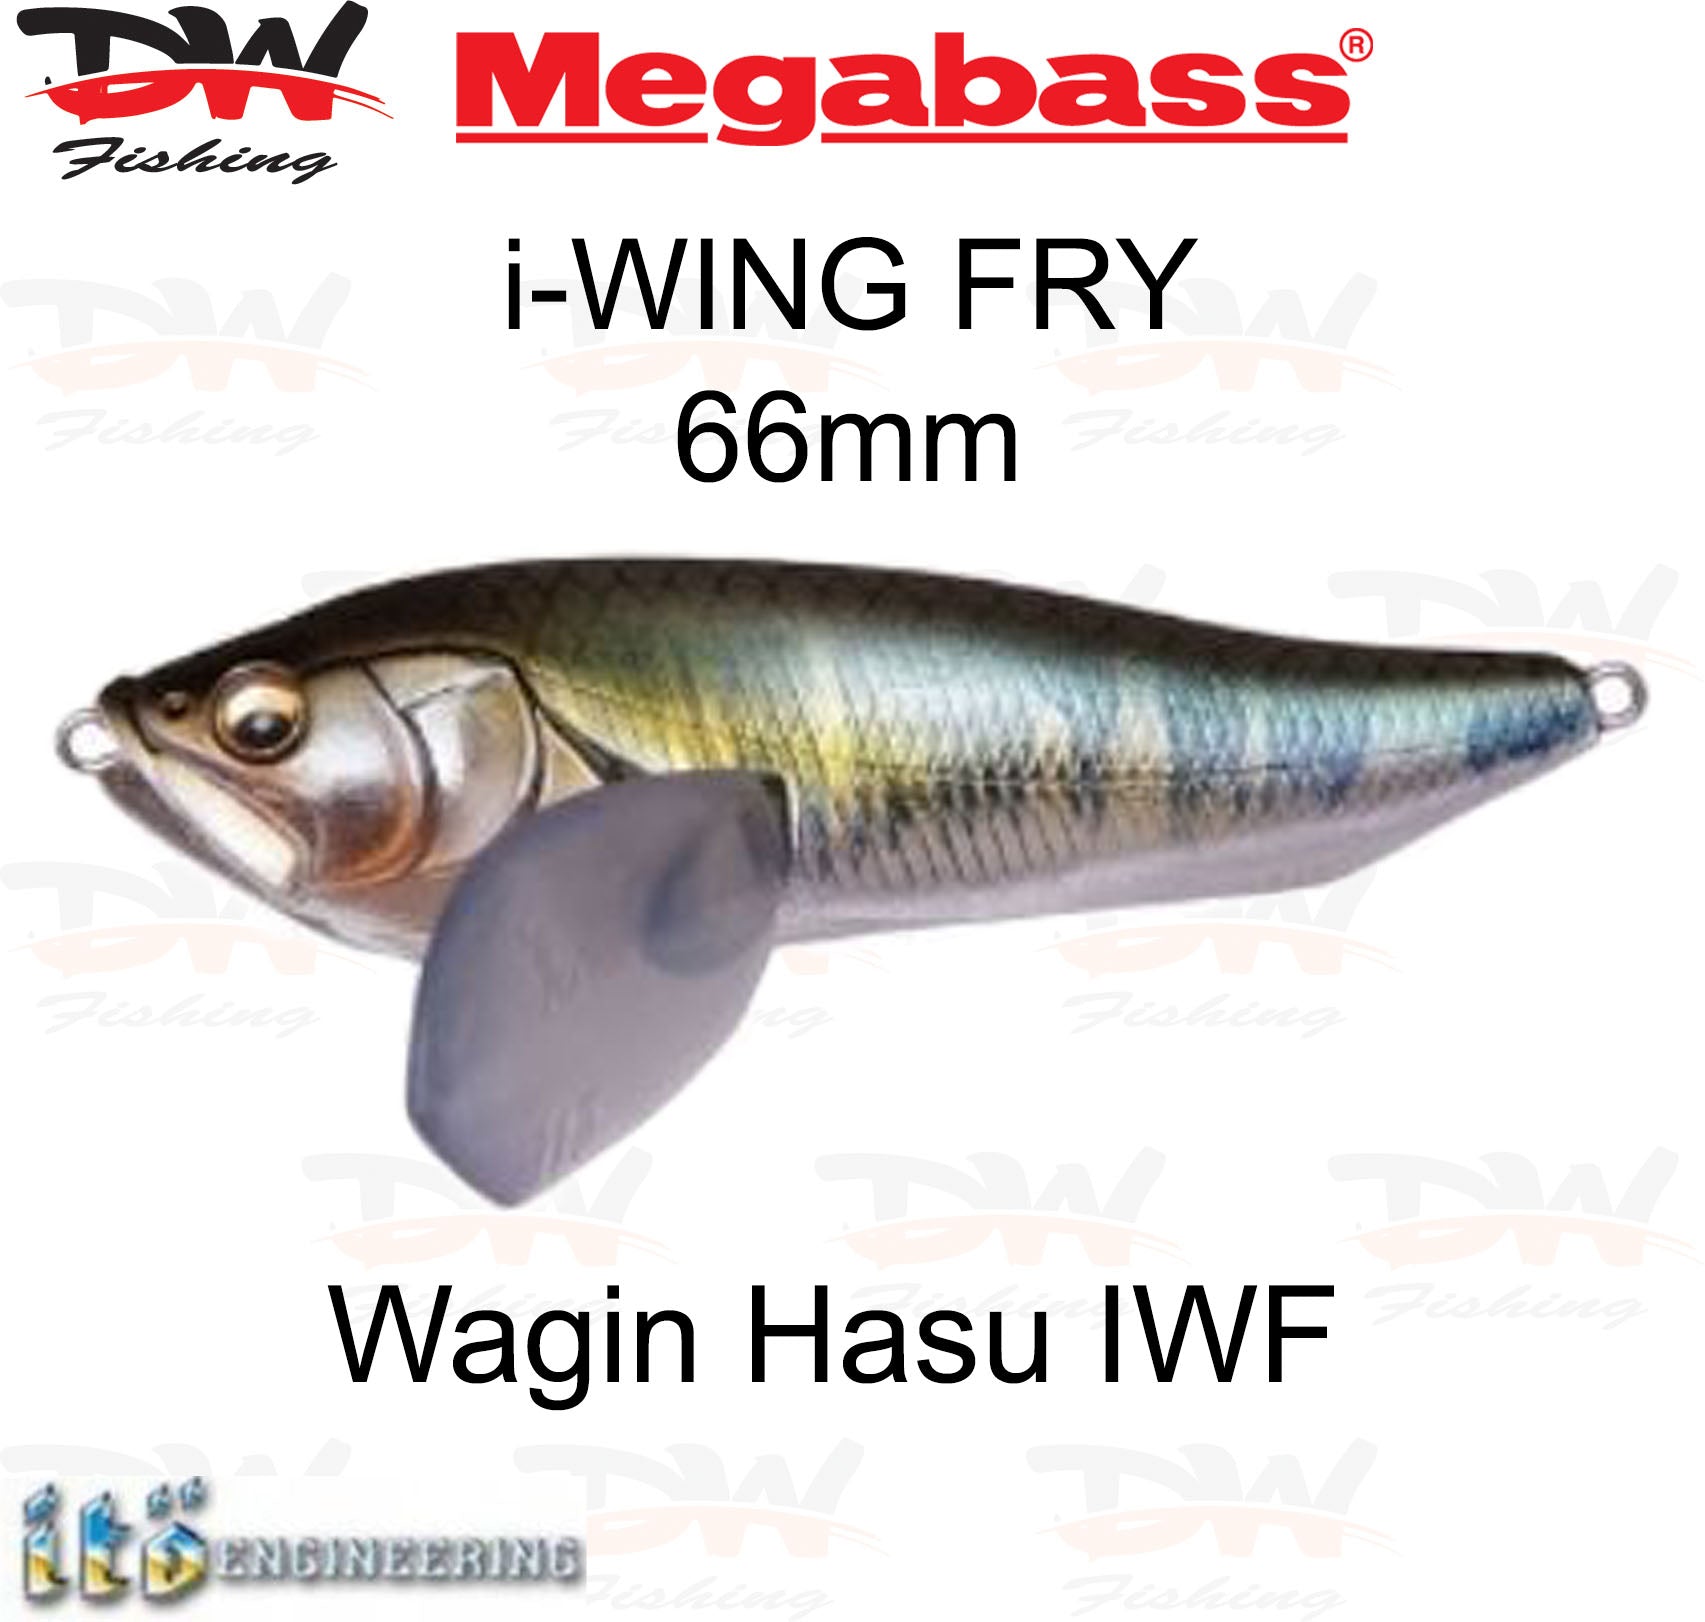 Megabass i-WING FRY surface lure single colour Wagin Hasu IWF